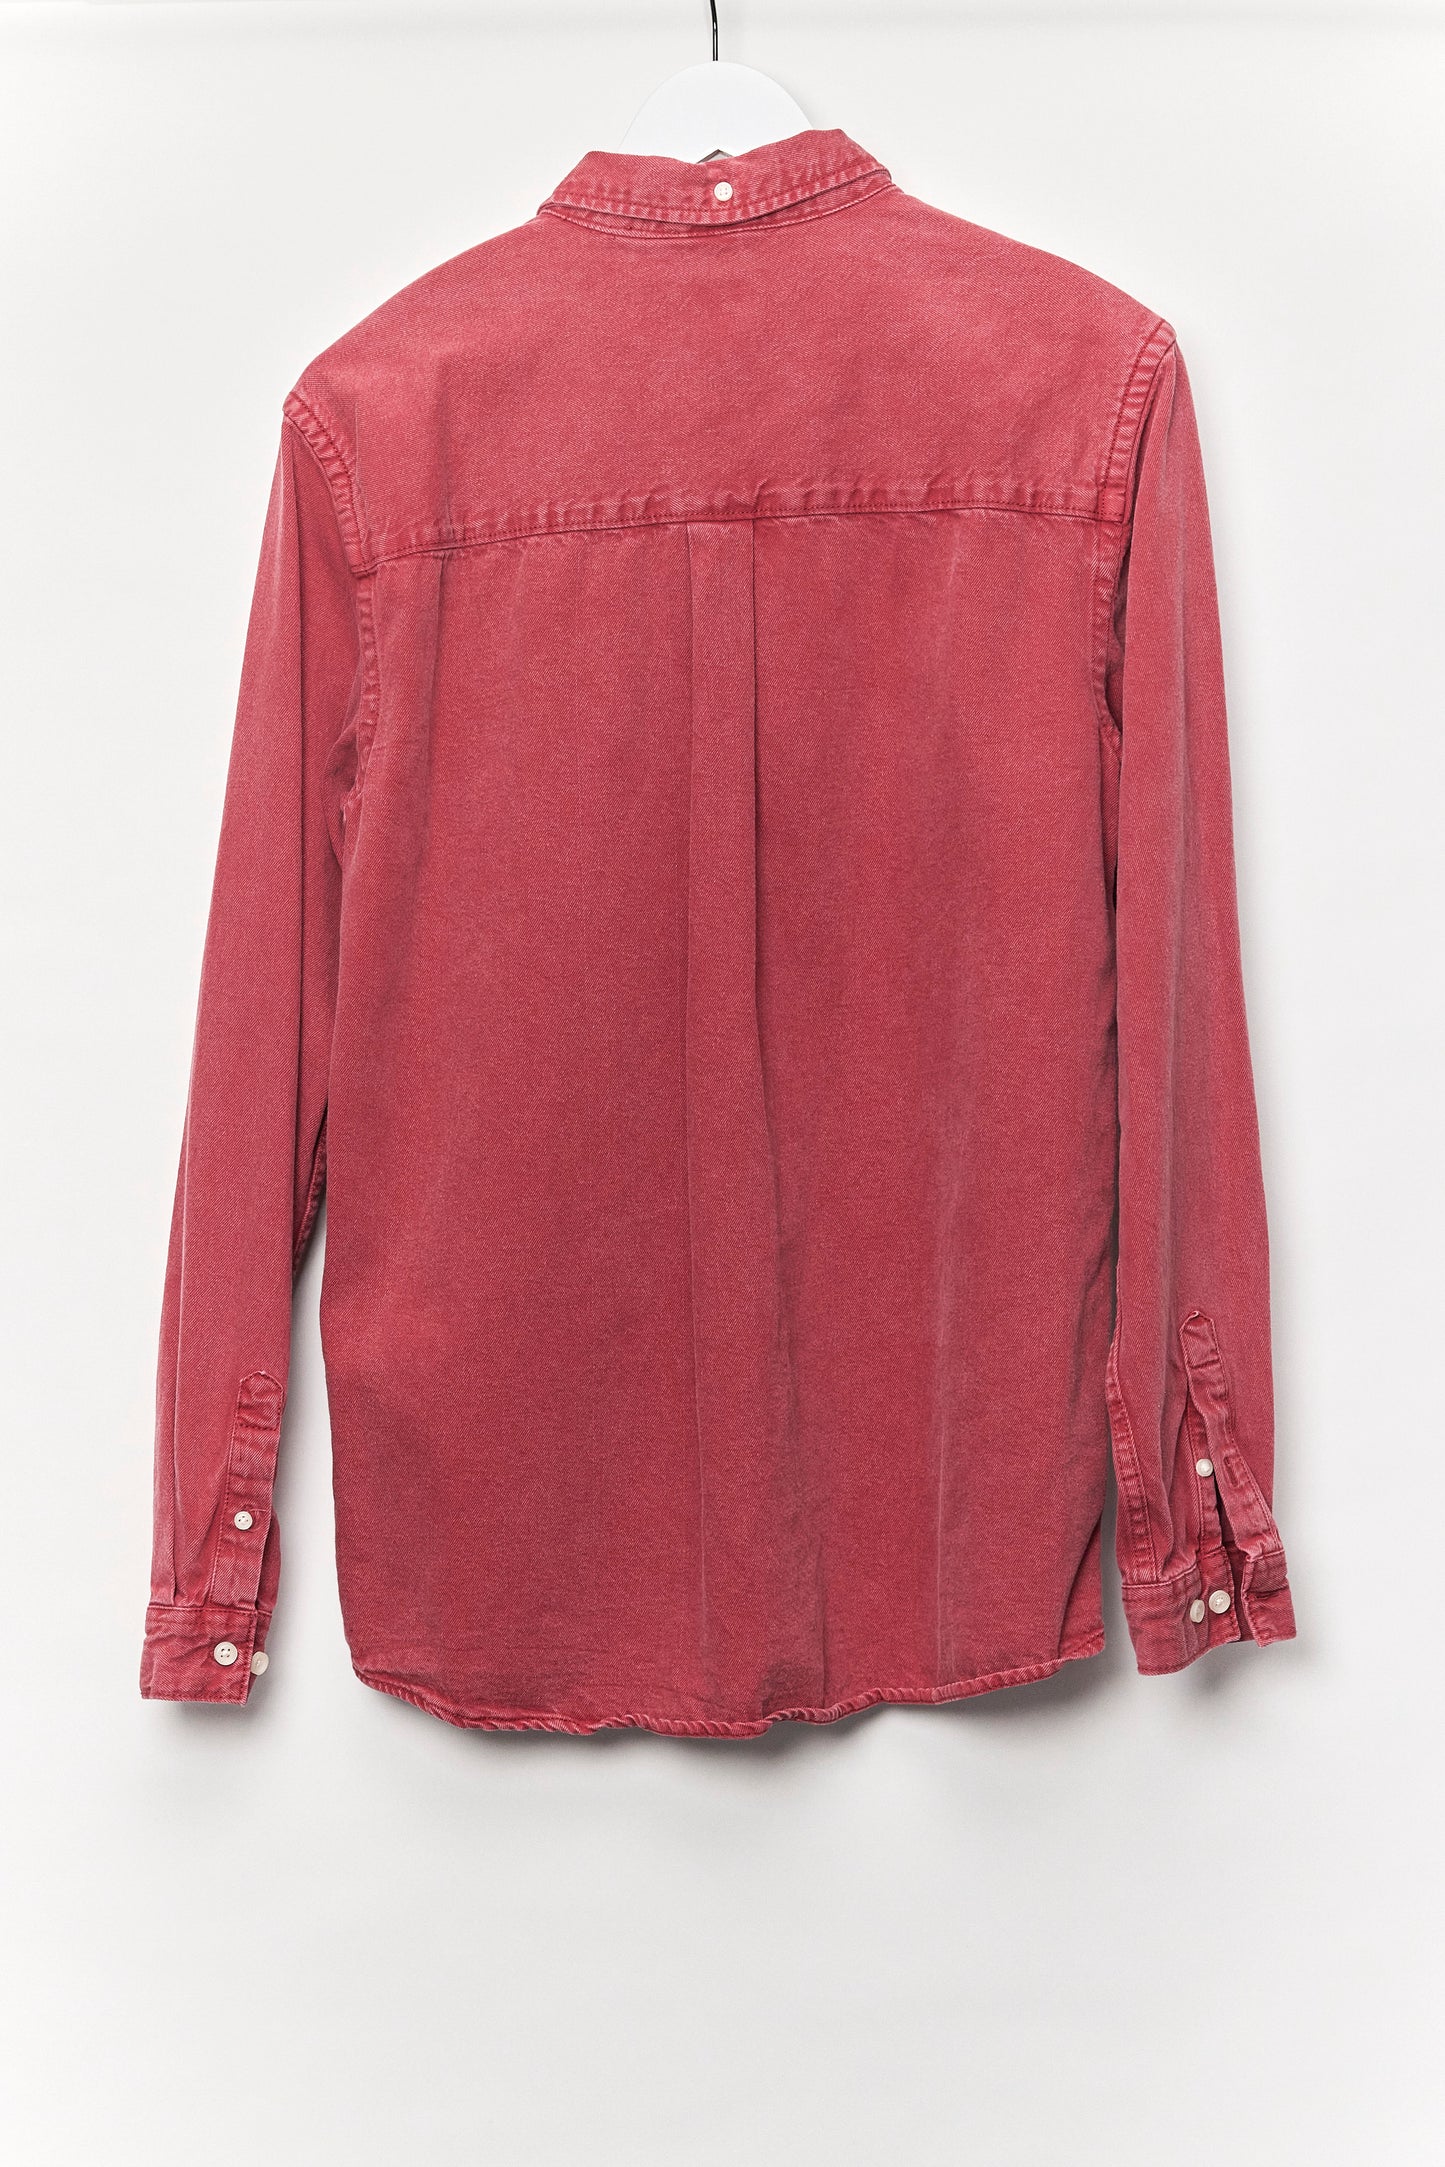 Mens Zara Red Oxford shirt Size Medium